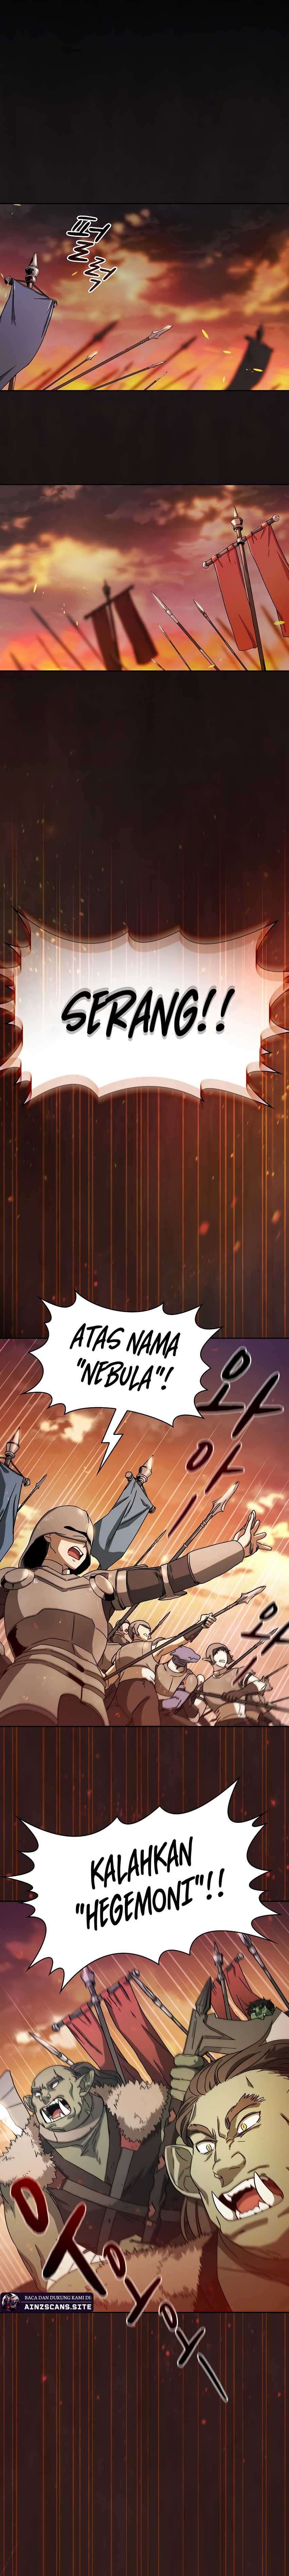 The Nebula’s Civilization Chapter 01 Image 3